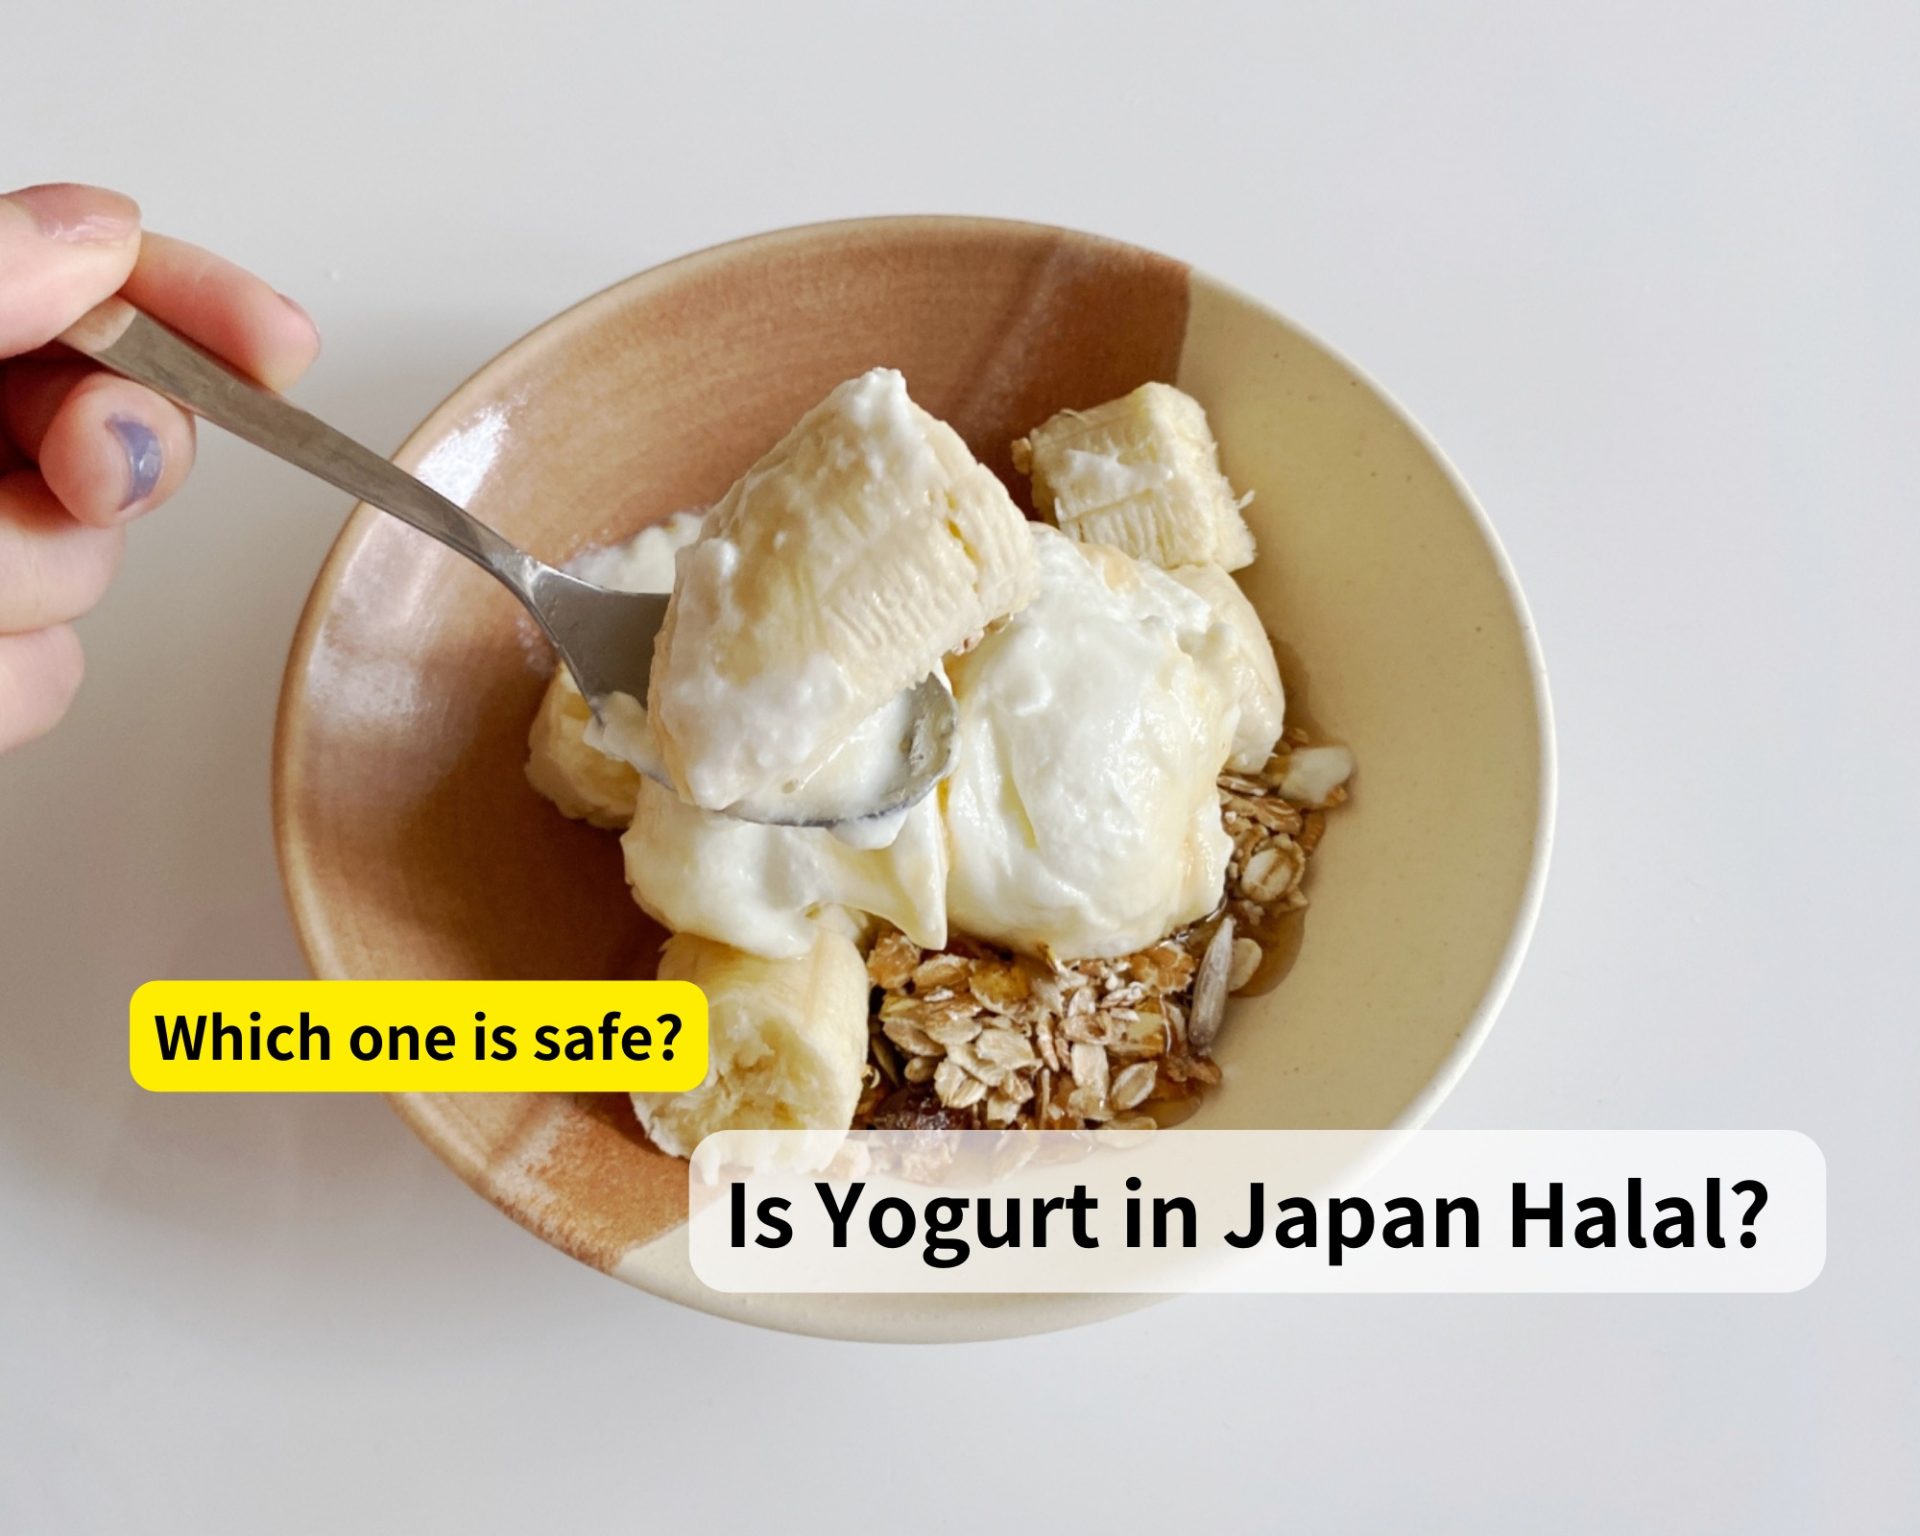 Danone Yogur natural 960g is halal suitable